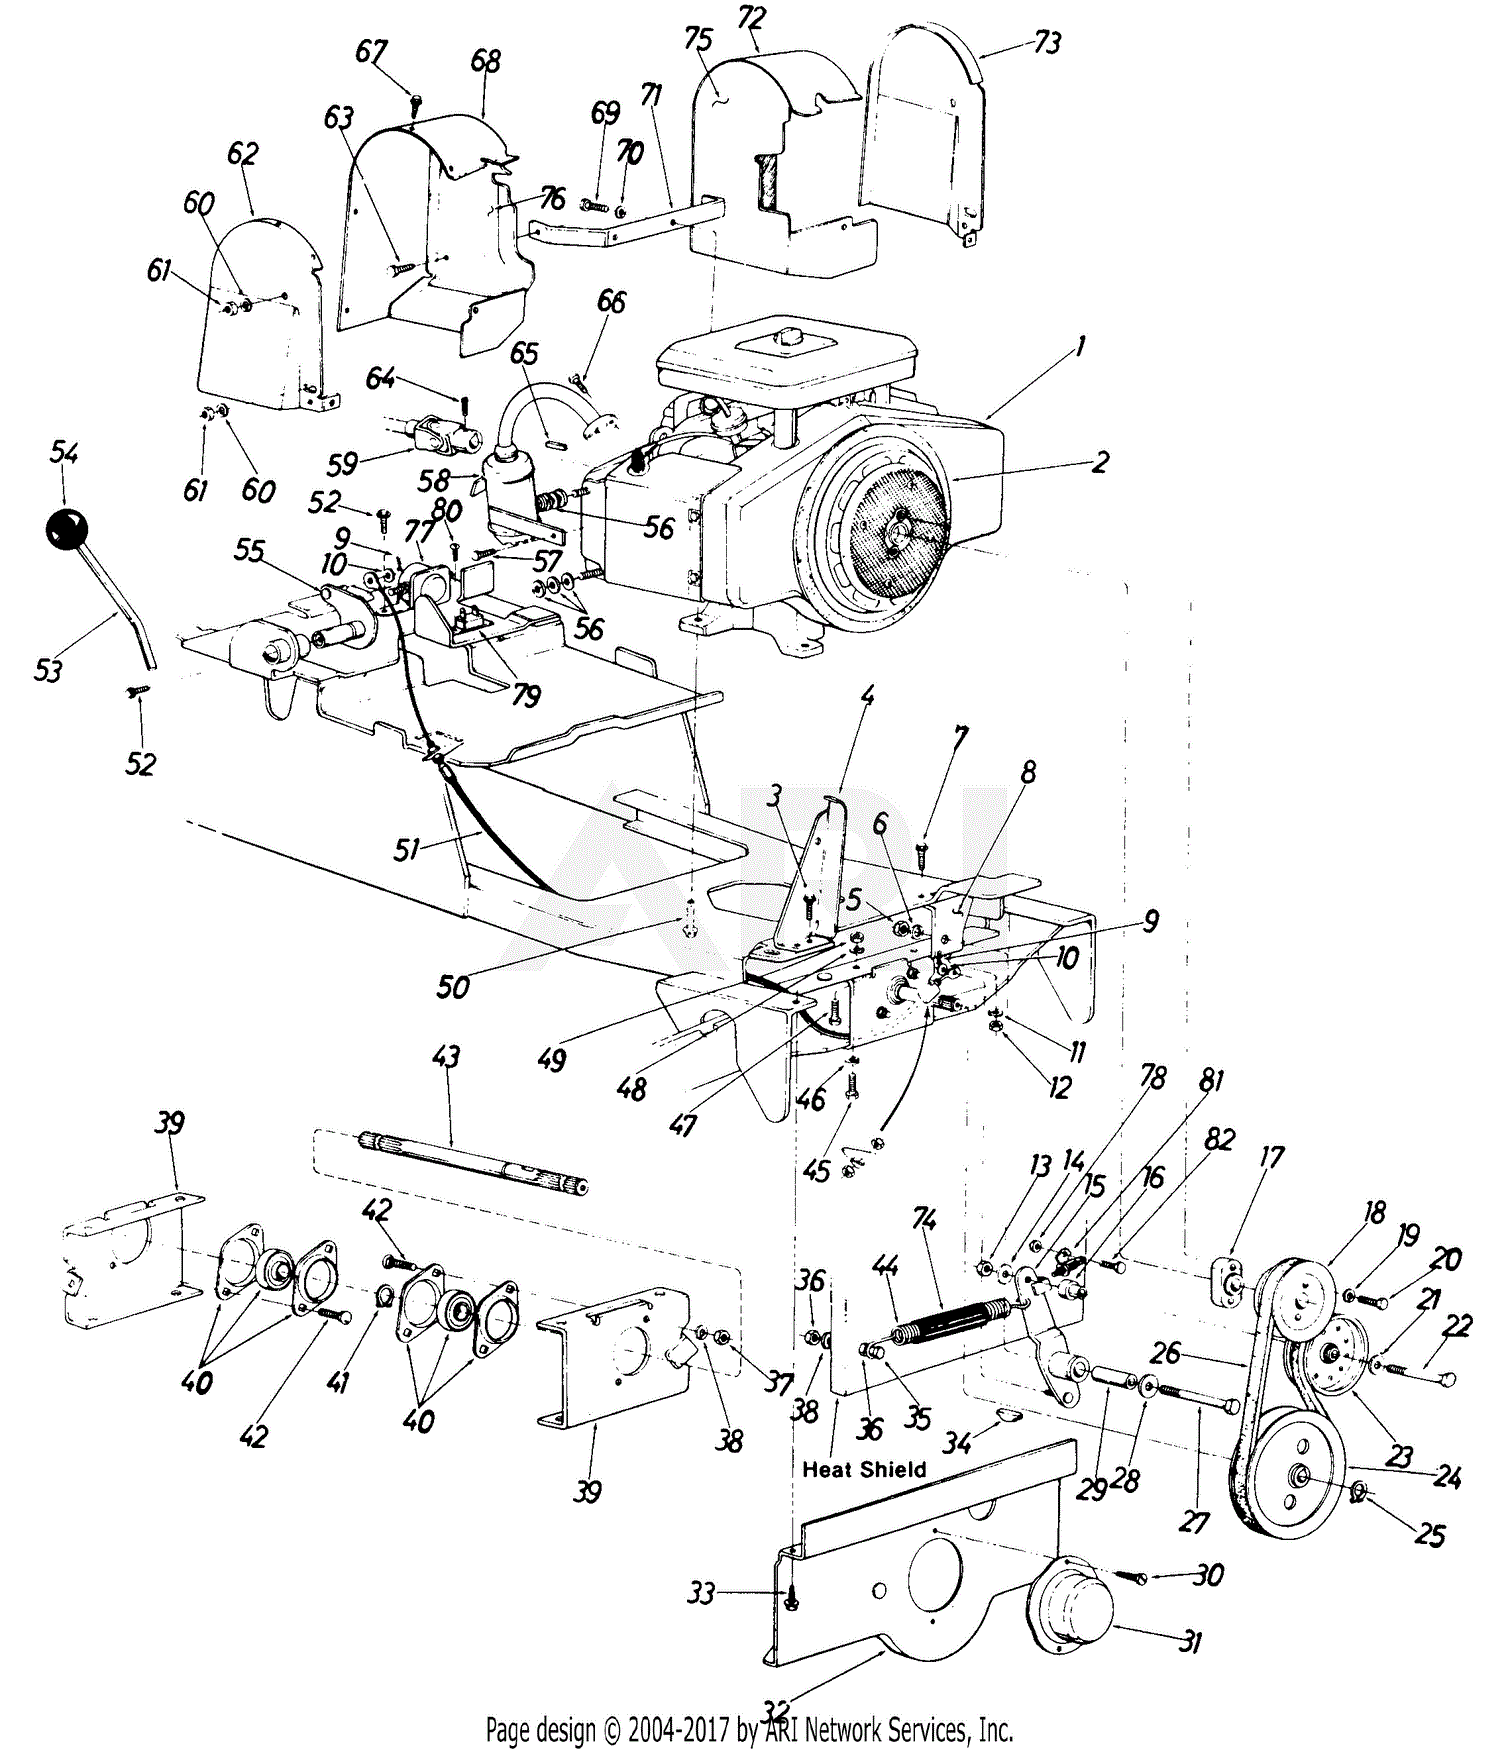 white gt 1855 wiring diagram